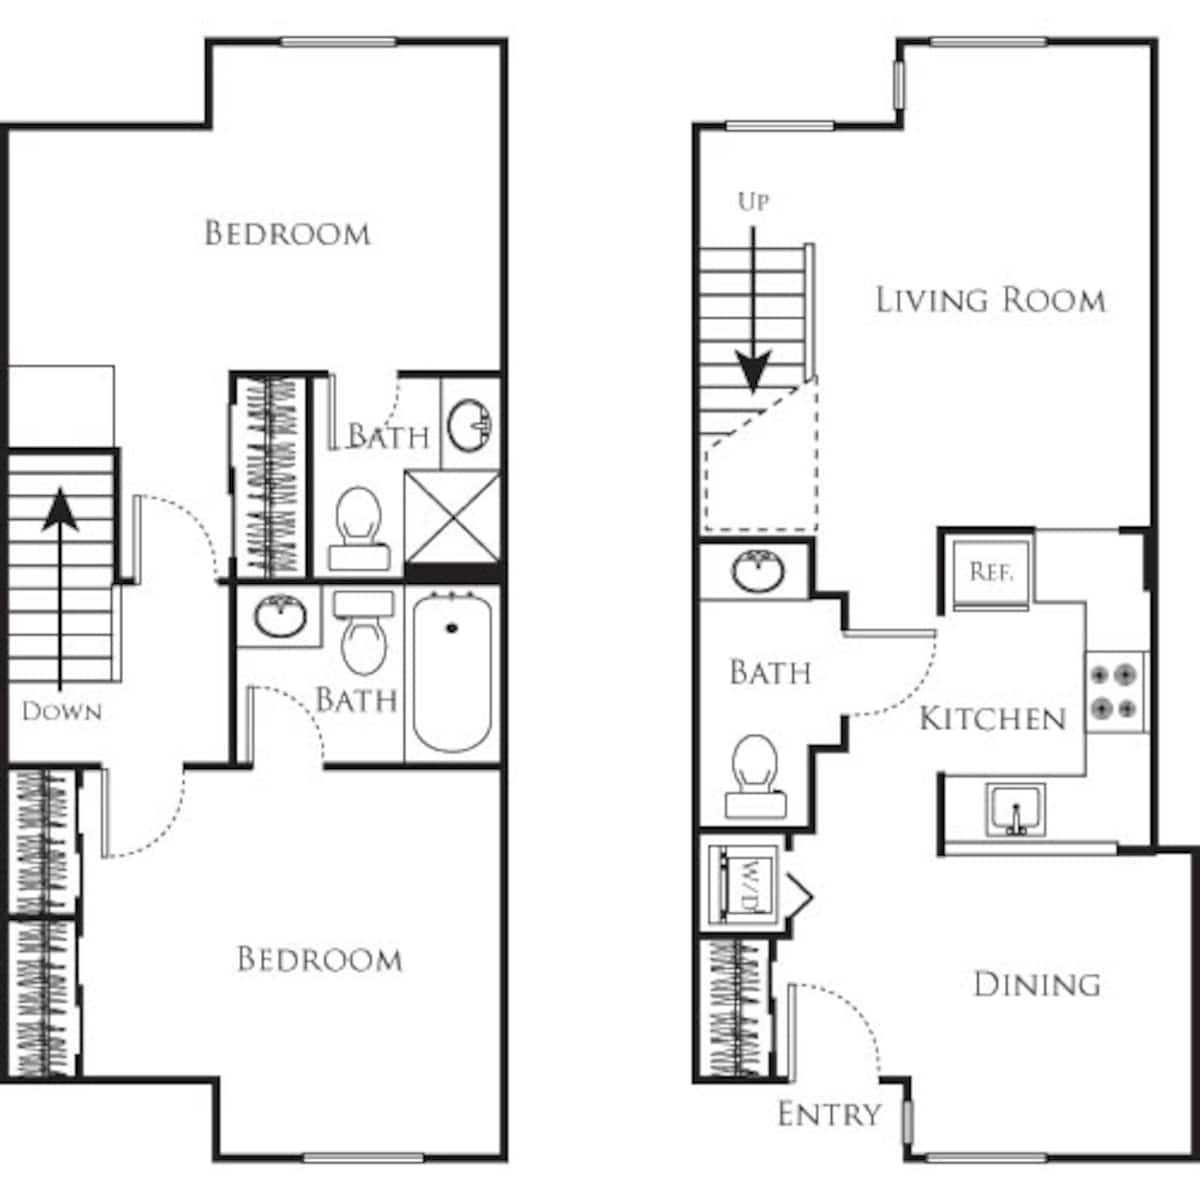 Floorplan diagram for Elite, showing 2 bedroom